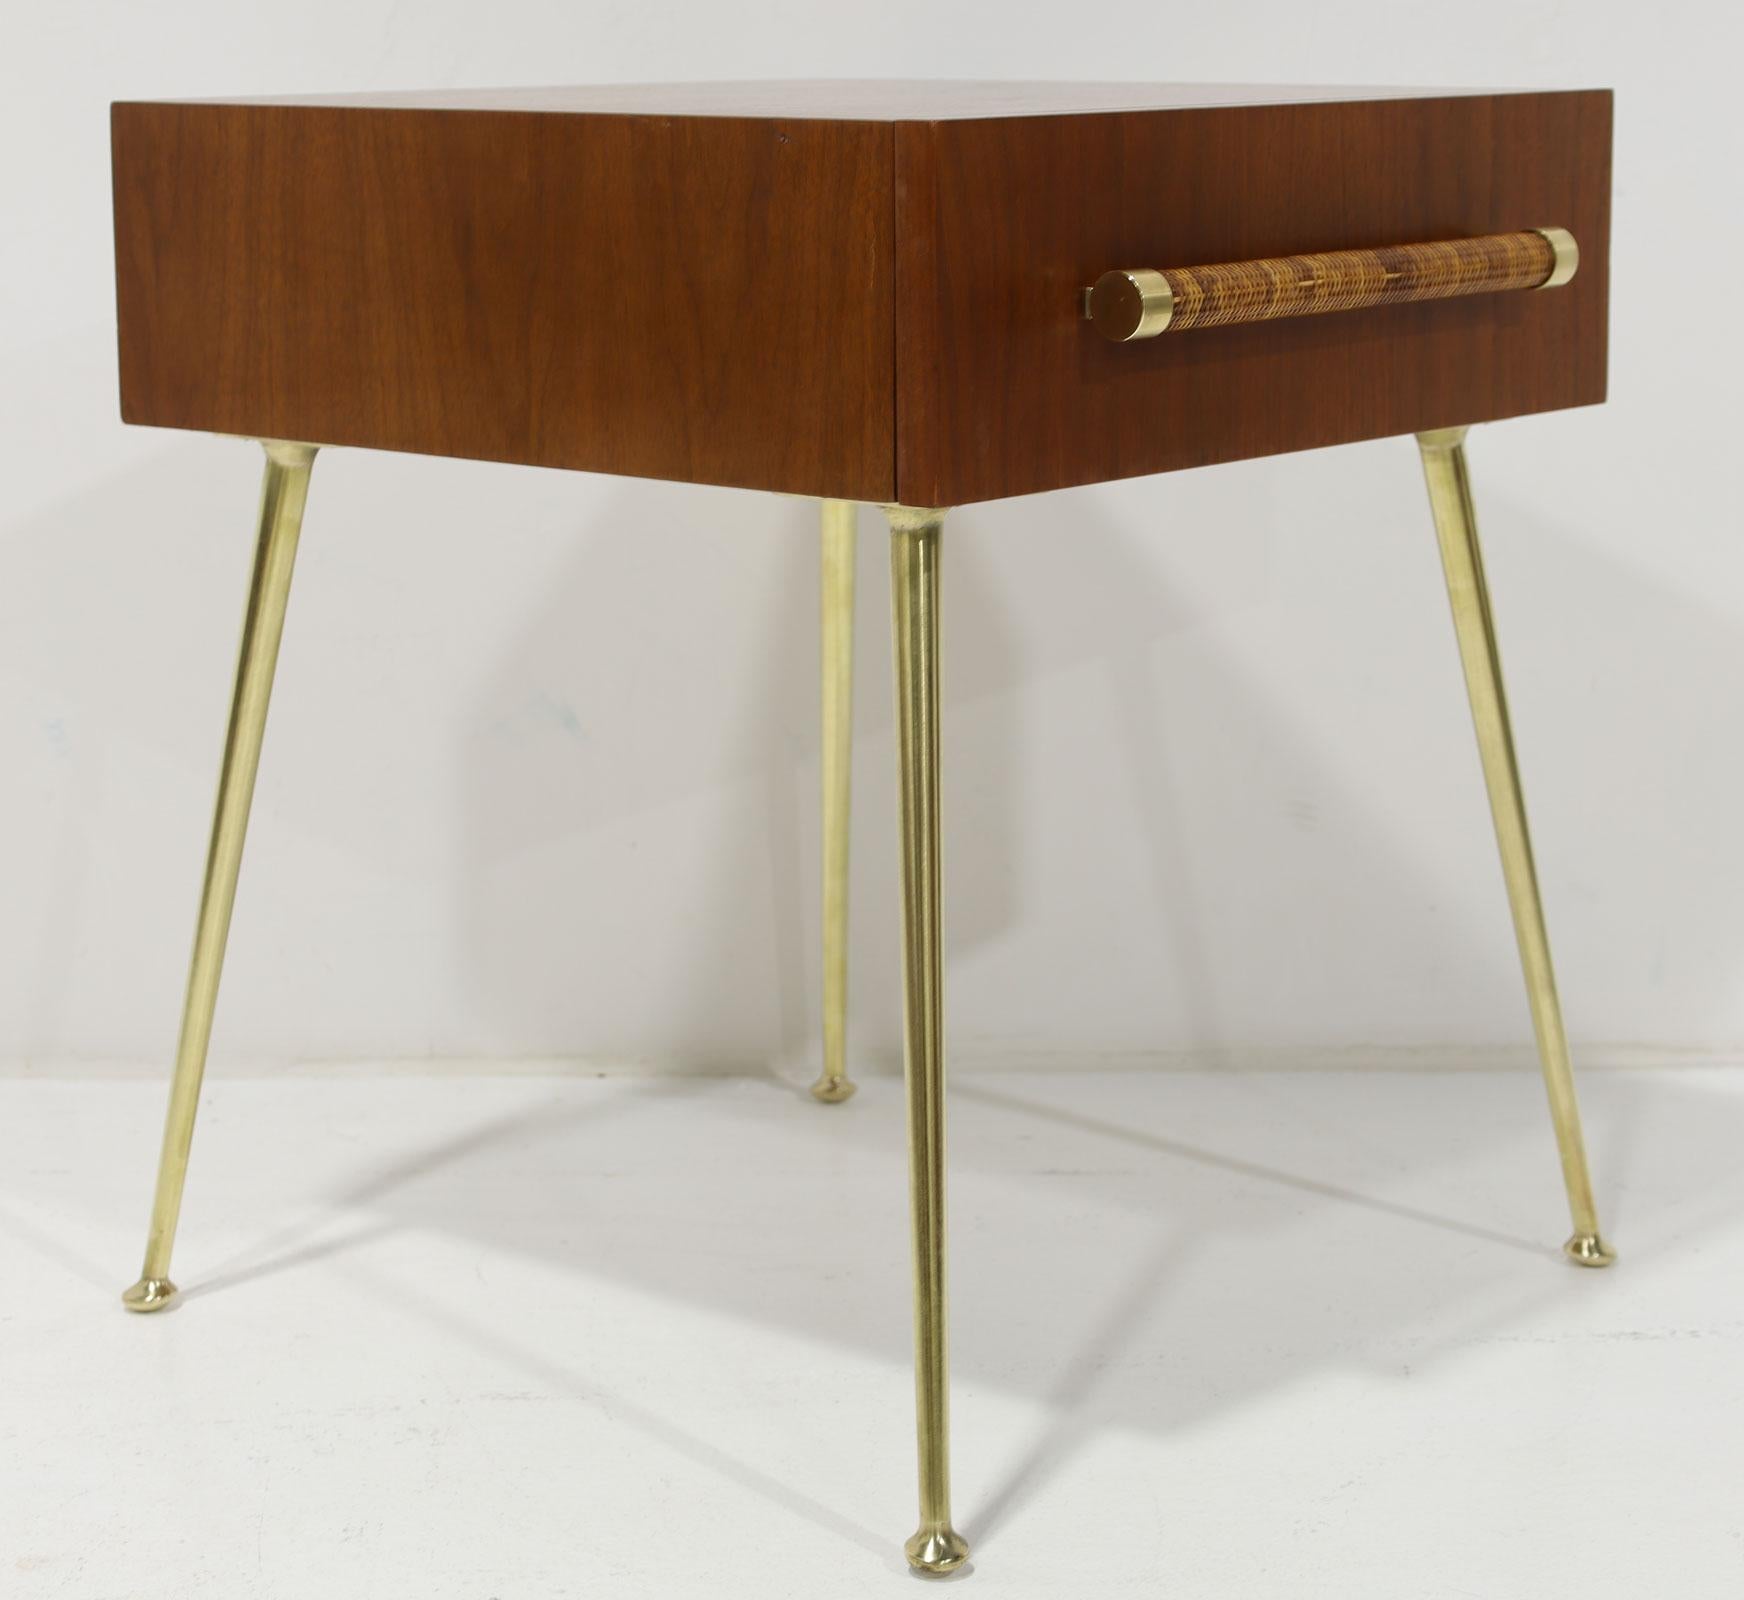 Mid-Century Modern Robsjohn-Gibbings for Widdicomb Side Table in Walnut, Brass and Cane, 1950s For Sale